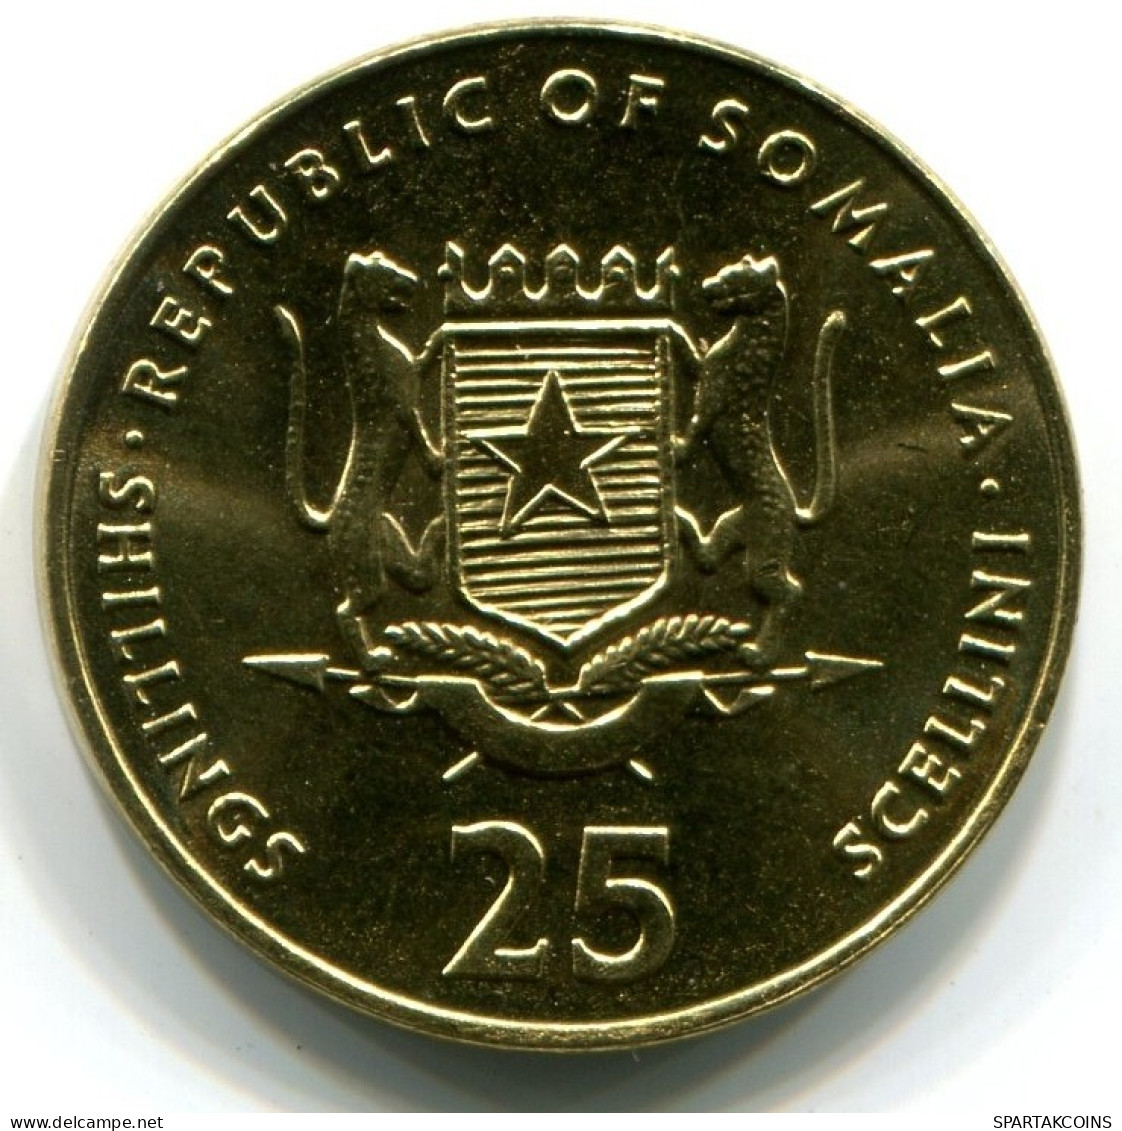 25 SHILLINGS 2001 SOMALIA UNC Soccer Player Coin #W11229.U.A - Somalia